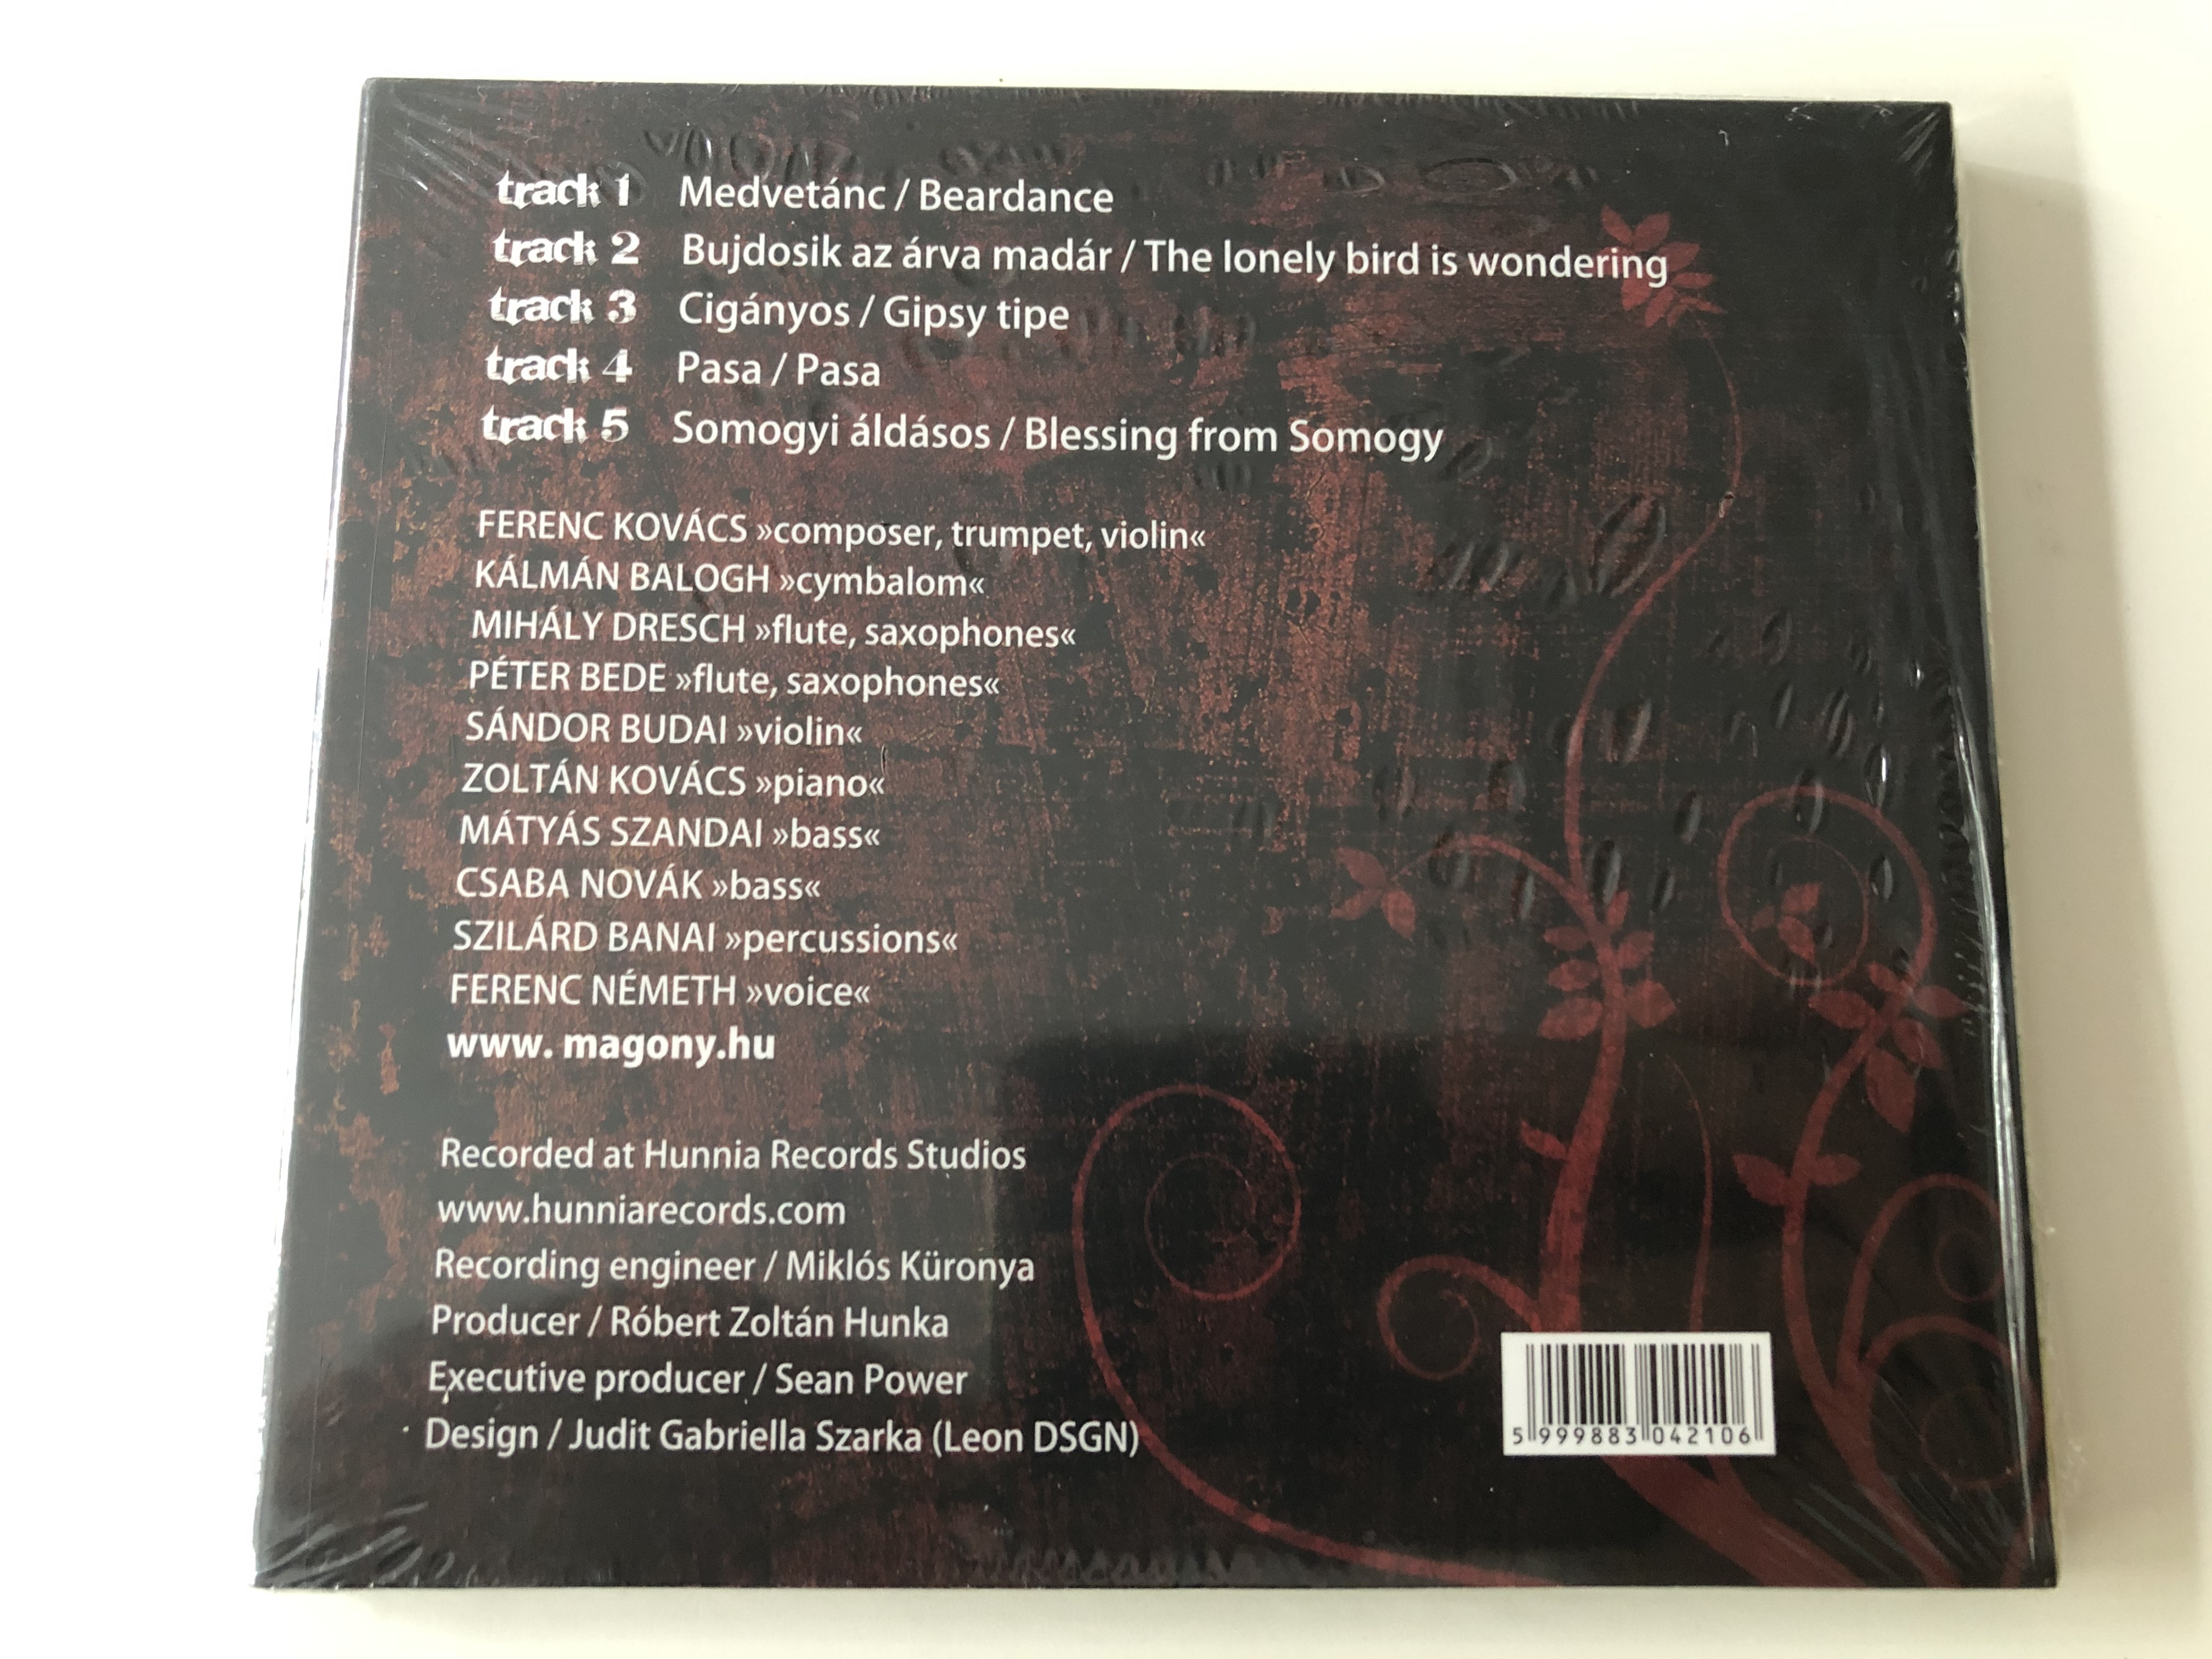 bear-dance-grand-magony-orchestra-kovacs-ferenc-hunnia-records-audio-cd-hrcd-705-3-.jpg